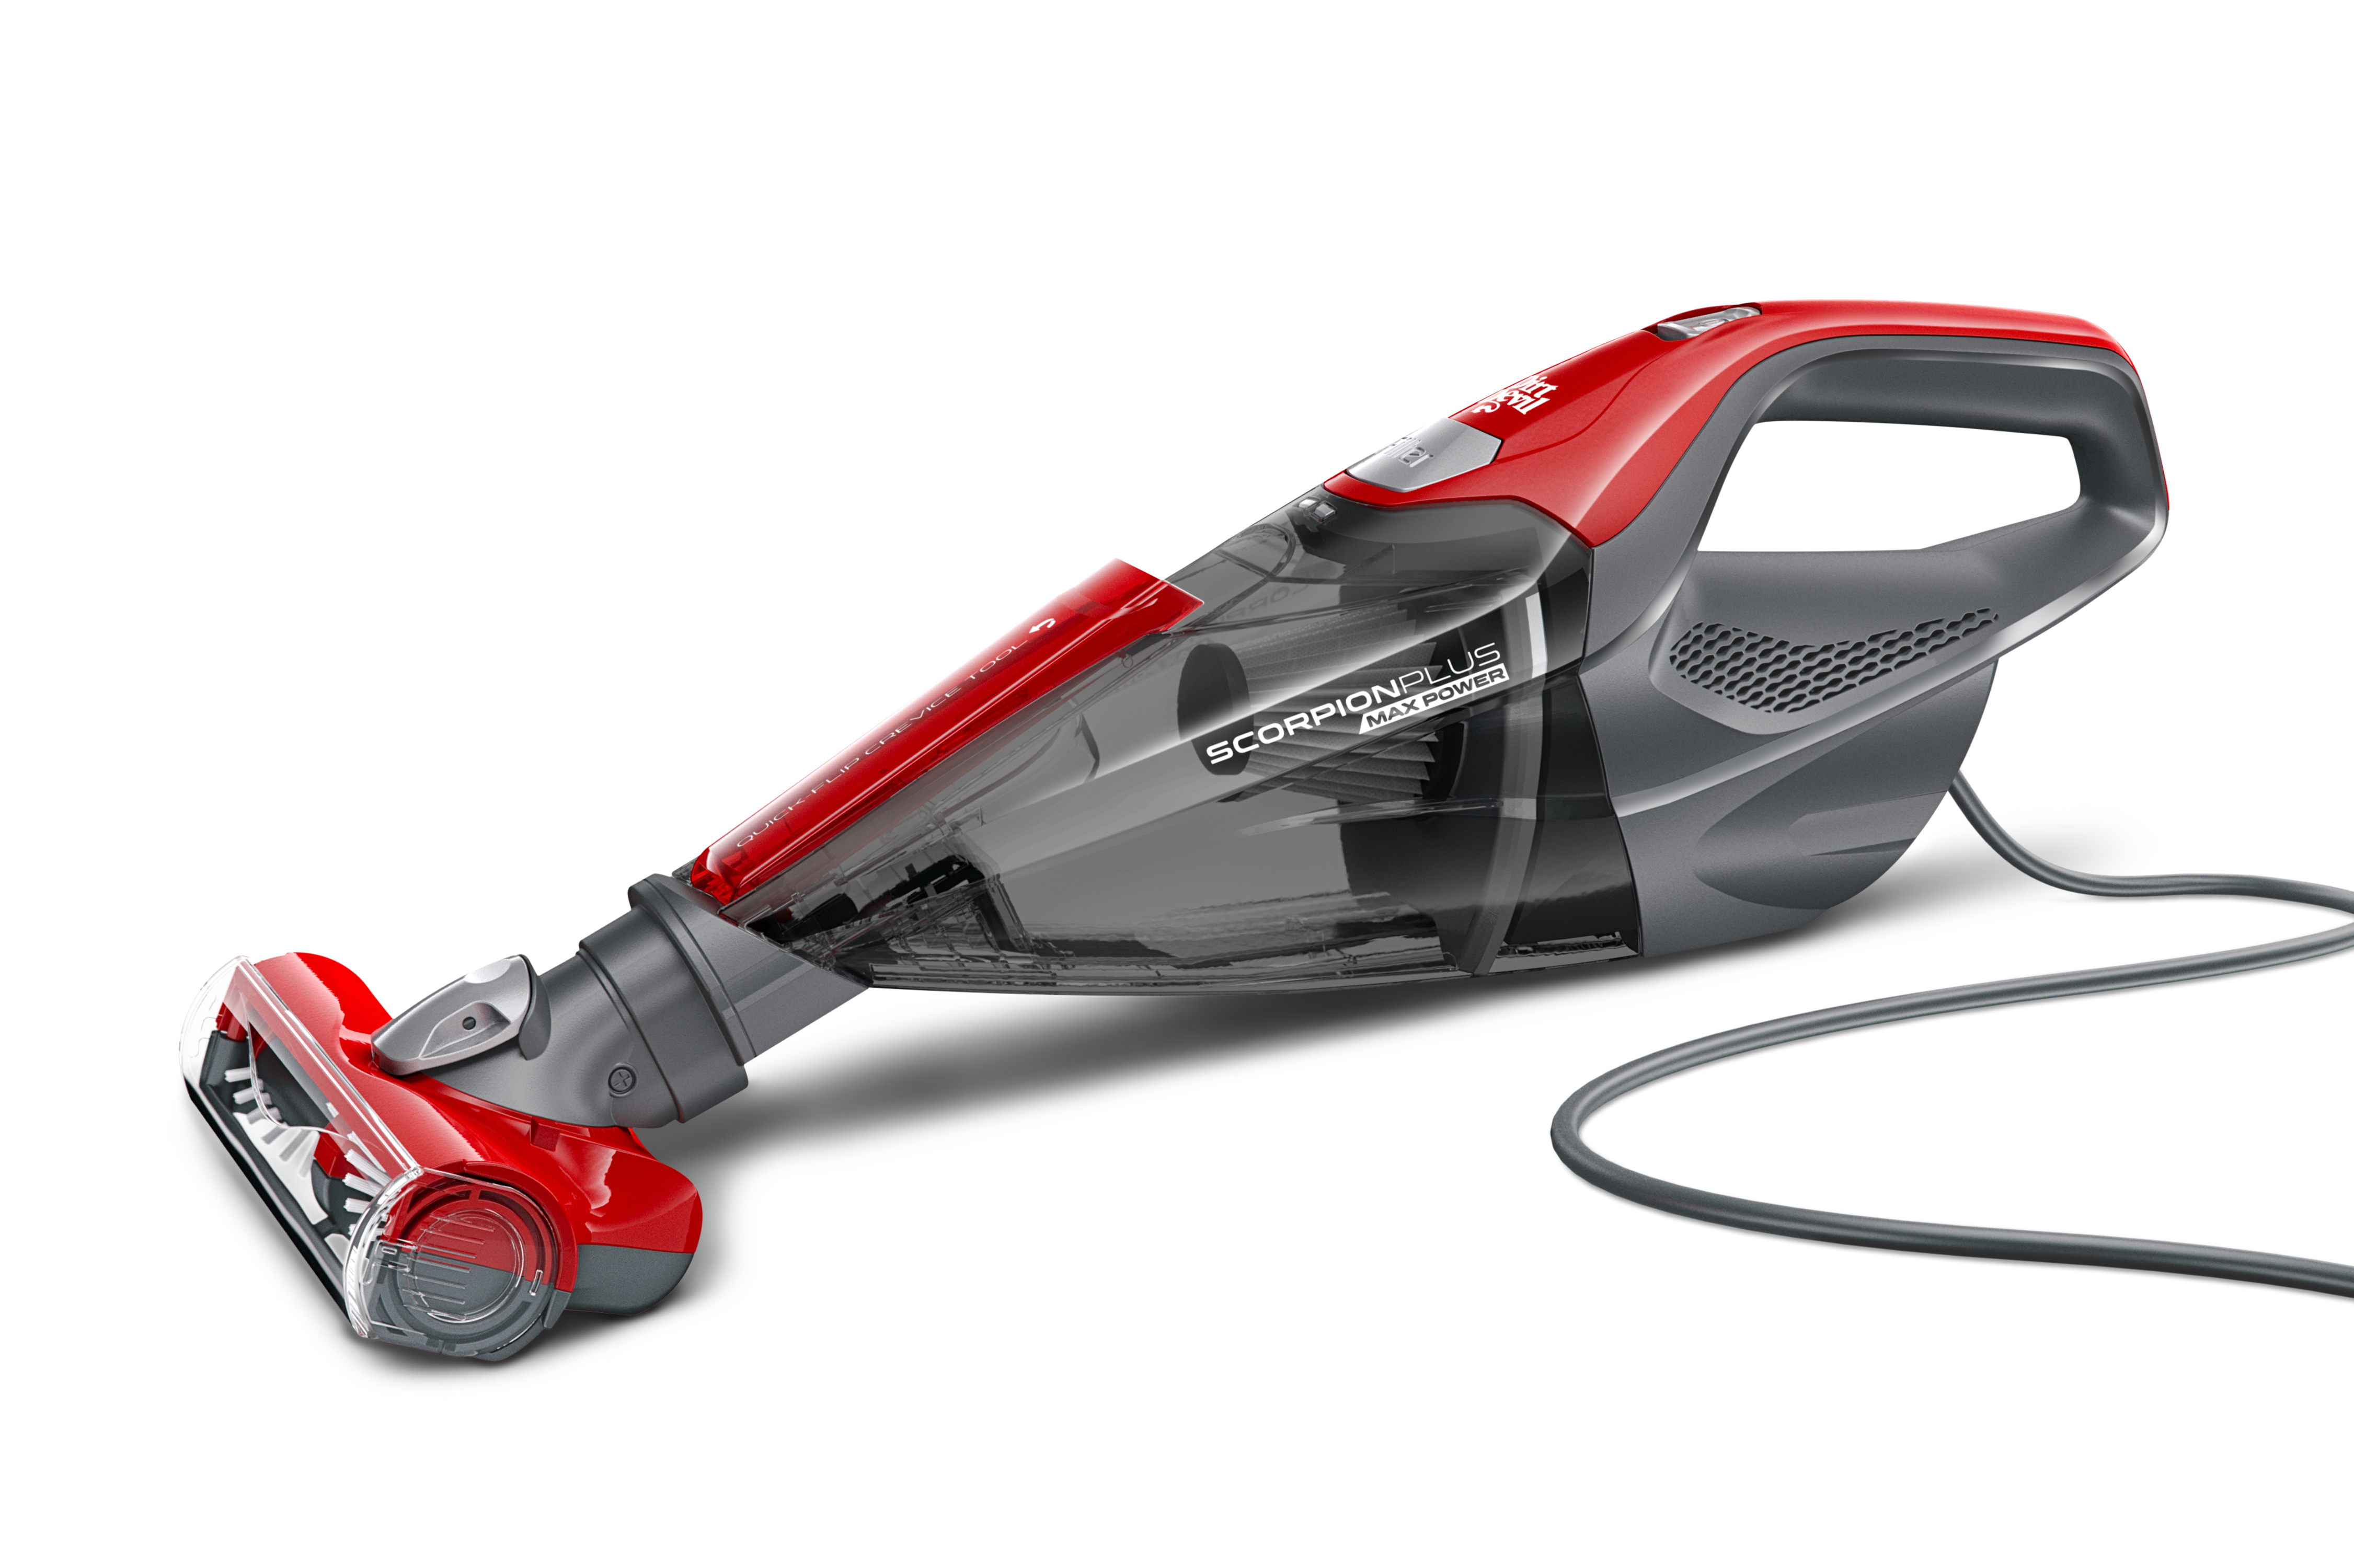 Dirt Devil Scorpion Plus Corded Handheld Vacuum Cleaner, SD30025B, New - image 4 of 11